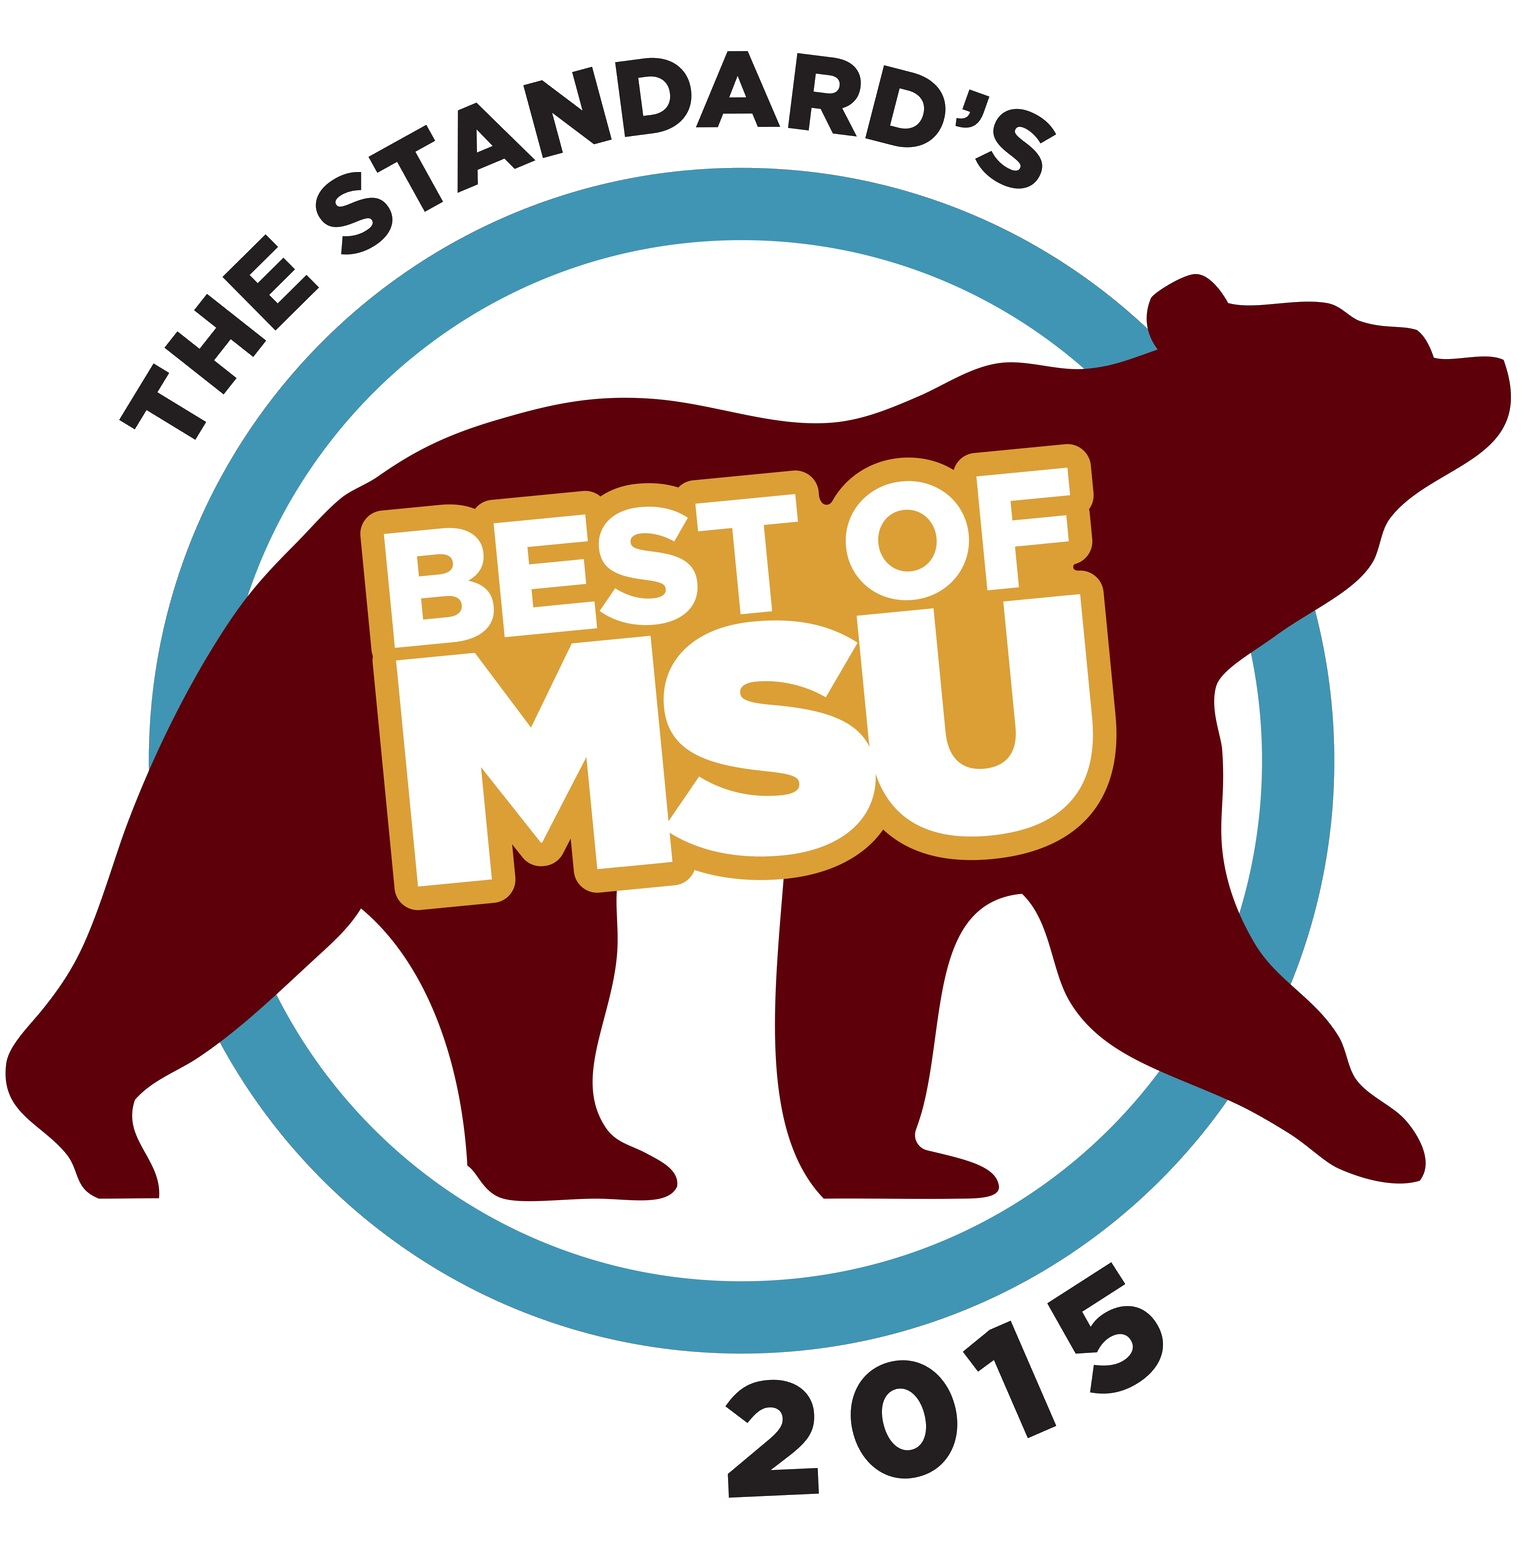 Best of MSU 2015